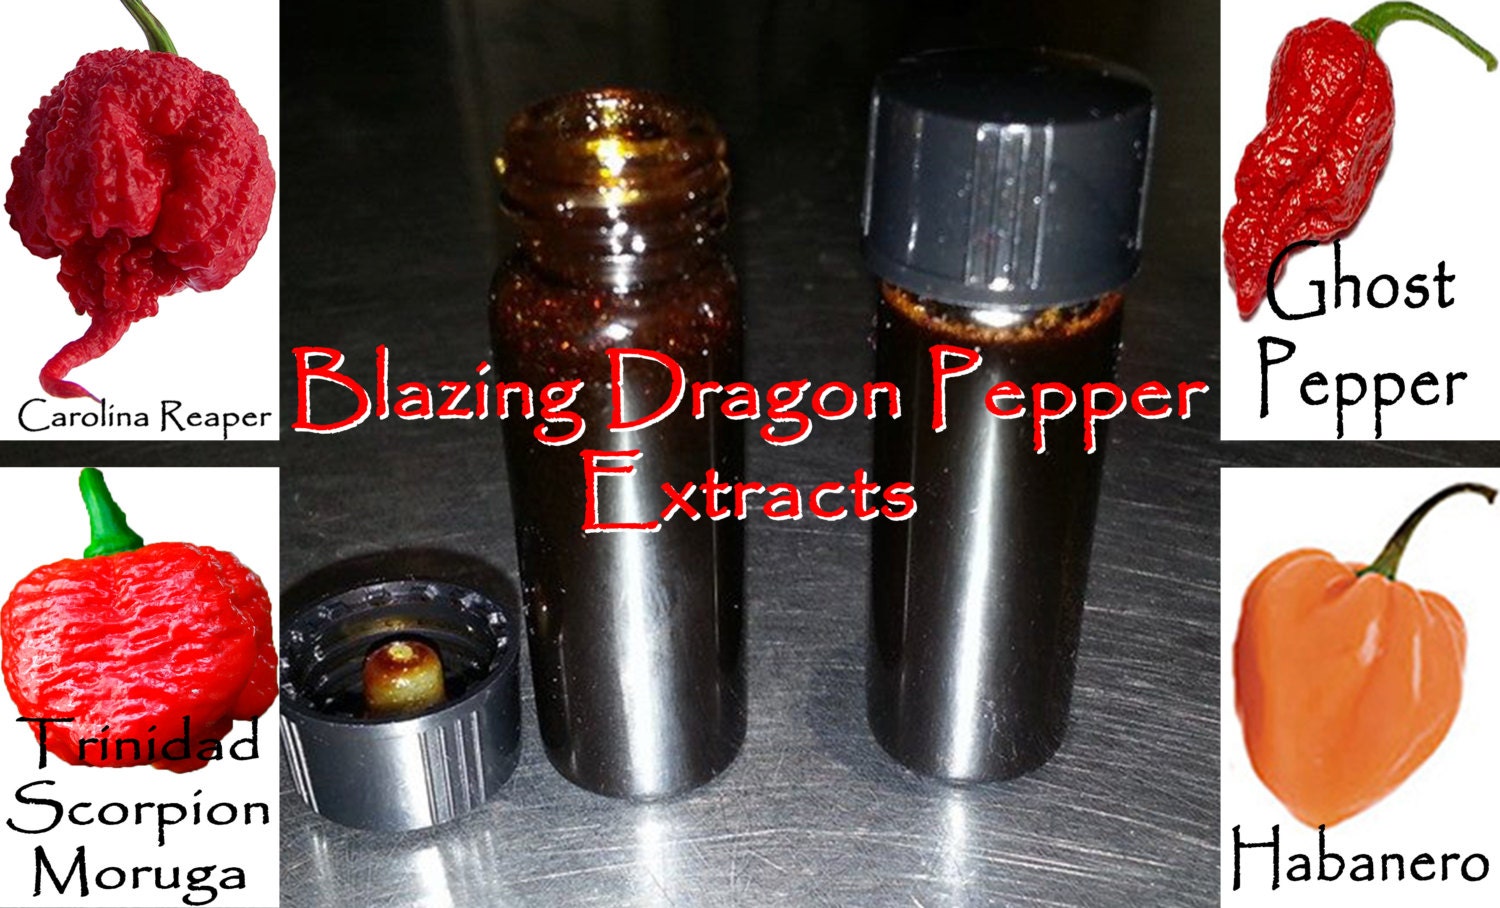 carolina reaper pepper vs trinidad scorpion